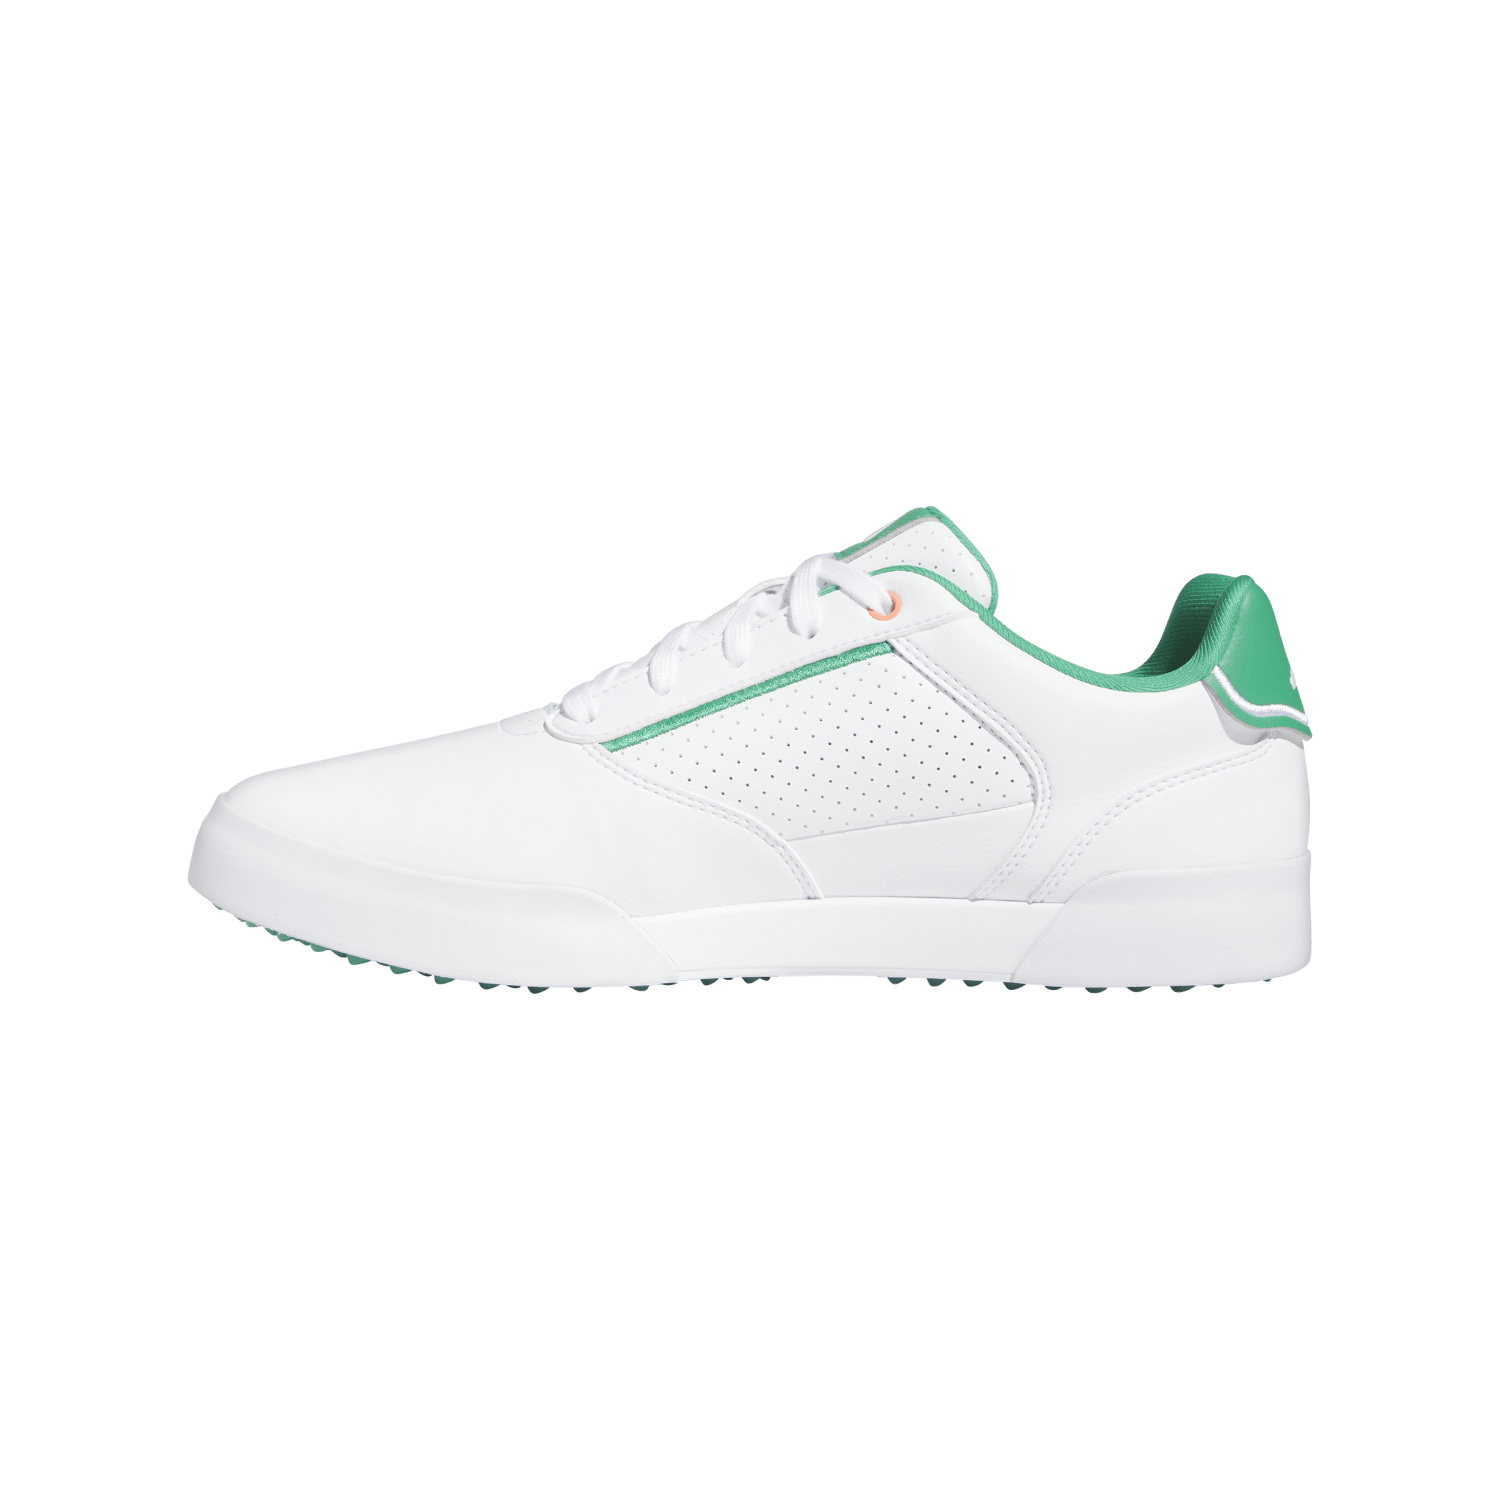 adidas RetroCross Golf Shoes